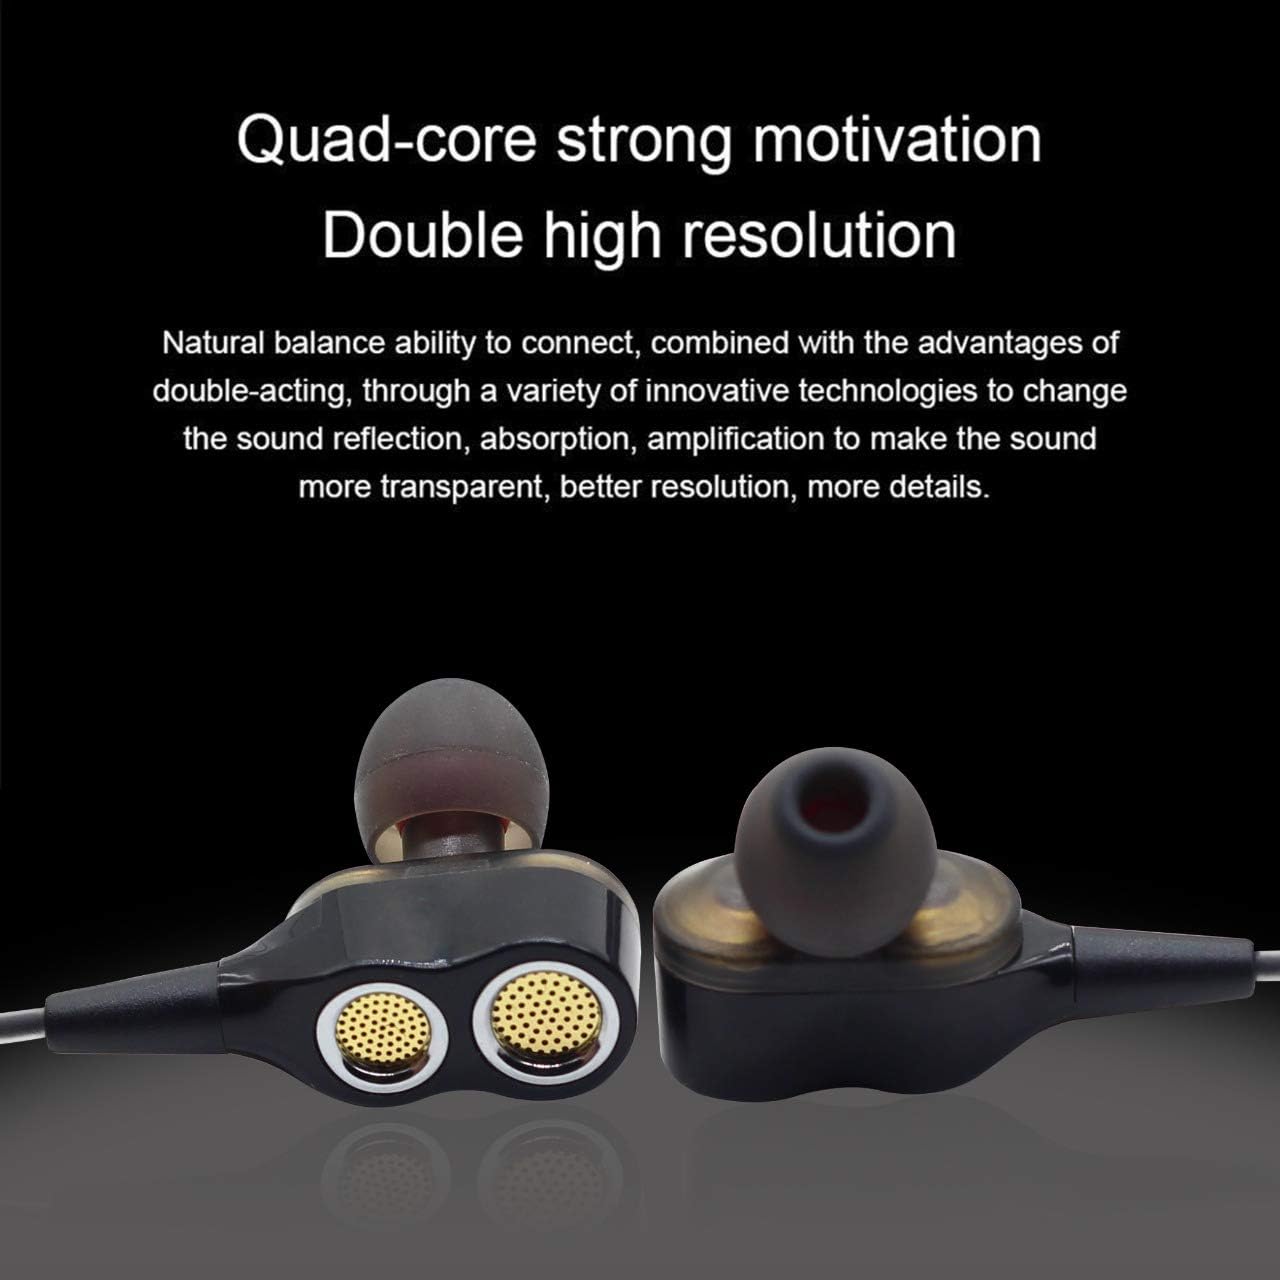 3.5 mm Dual Dynamic Drivers in-Ear Earphones with Mic (Black)